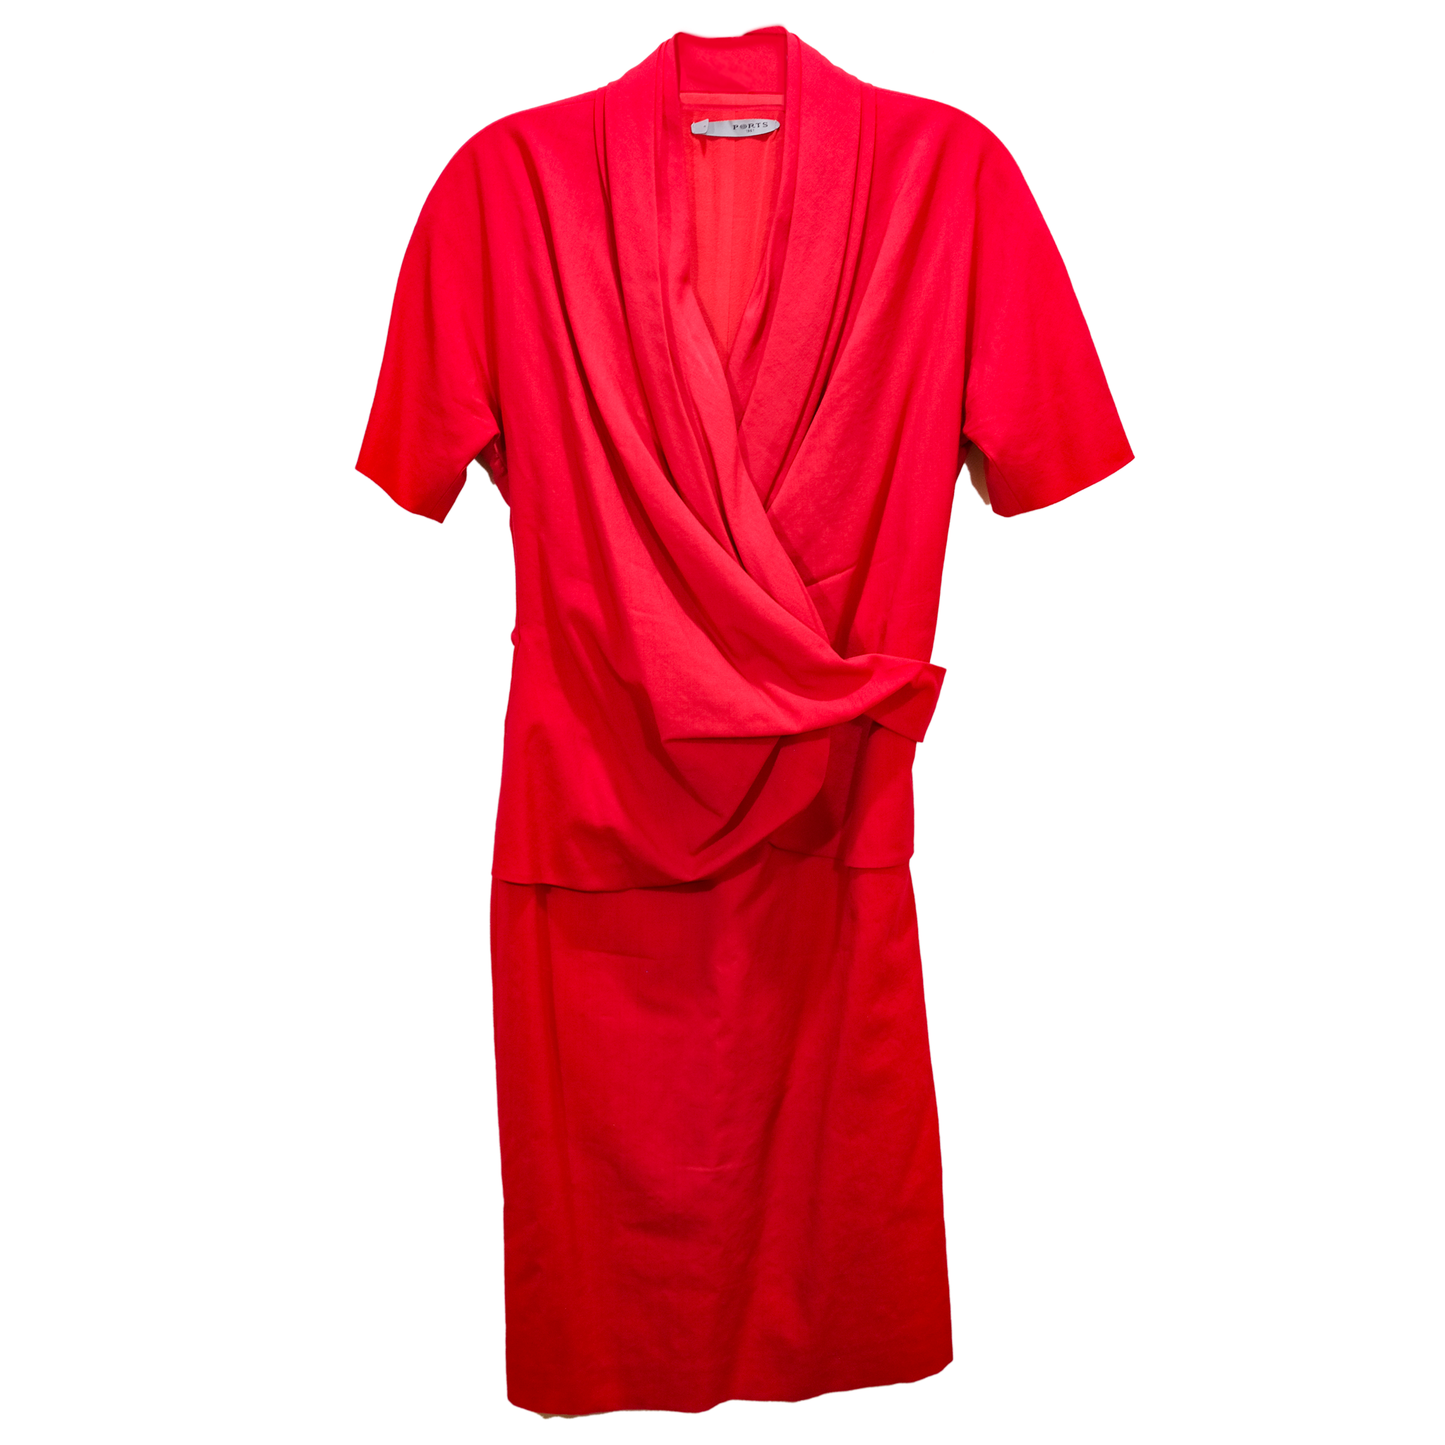 Ports 1961 Red Wrap Dress - Size SM